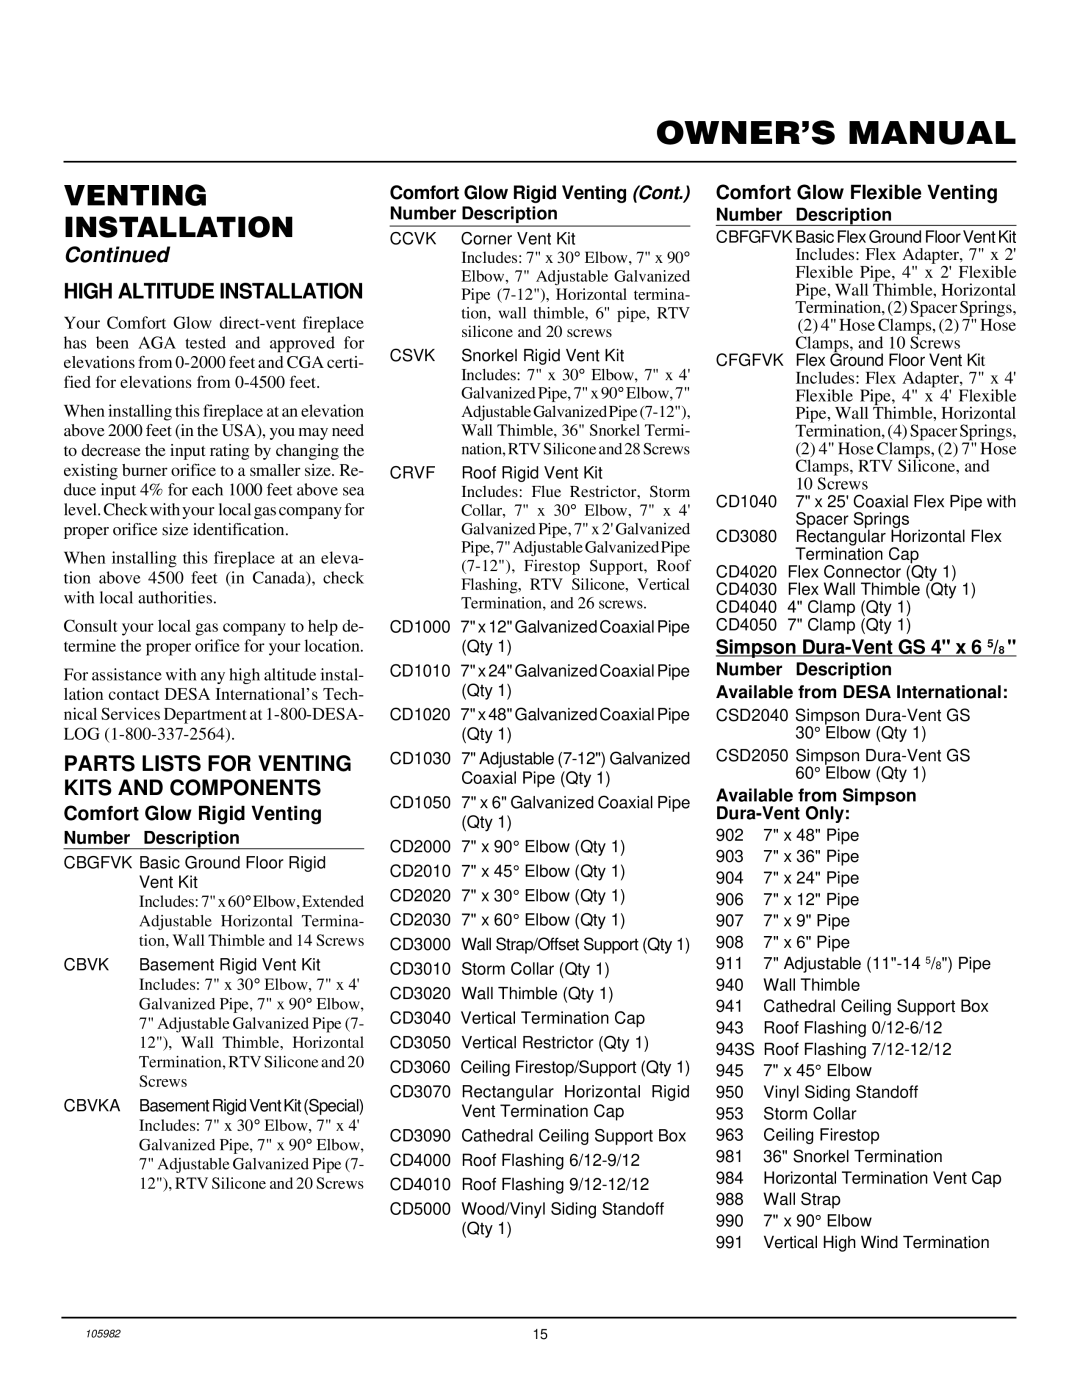 Desa CDV34NA, CDV34PA High Altitude Installation, Parts Lists for Venting Kits and Components, Comfort Glow Rigid Venting 